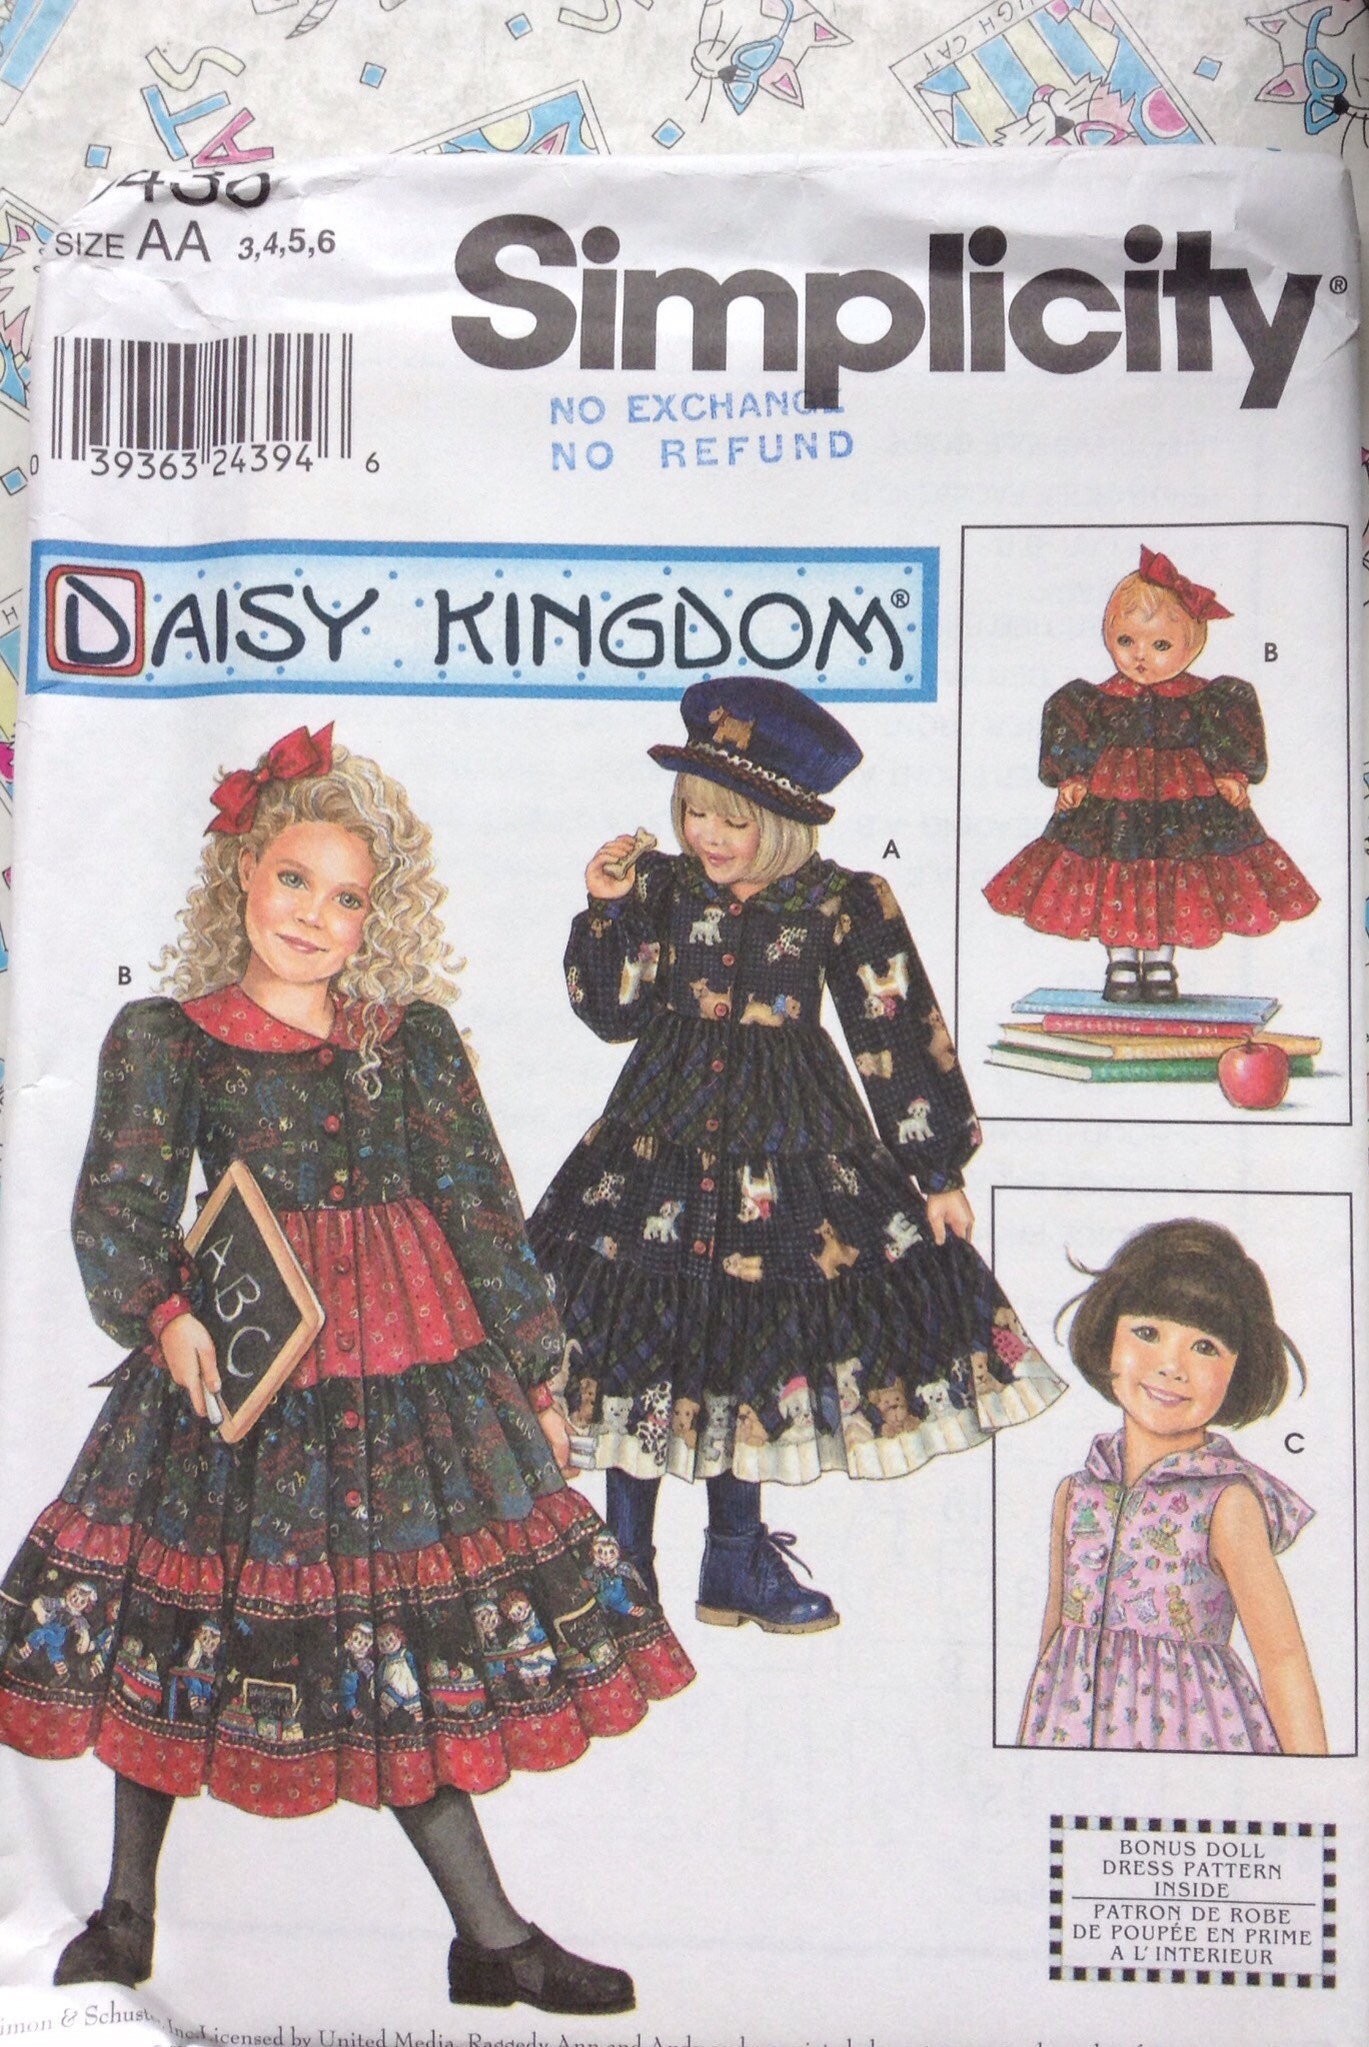 Girl/'s Dress Doll Dress Simplicity 9966 Sewing Pattern Daisy Kingdom Size 2-4